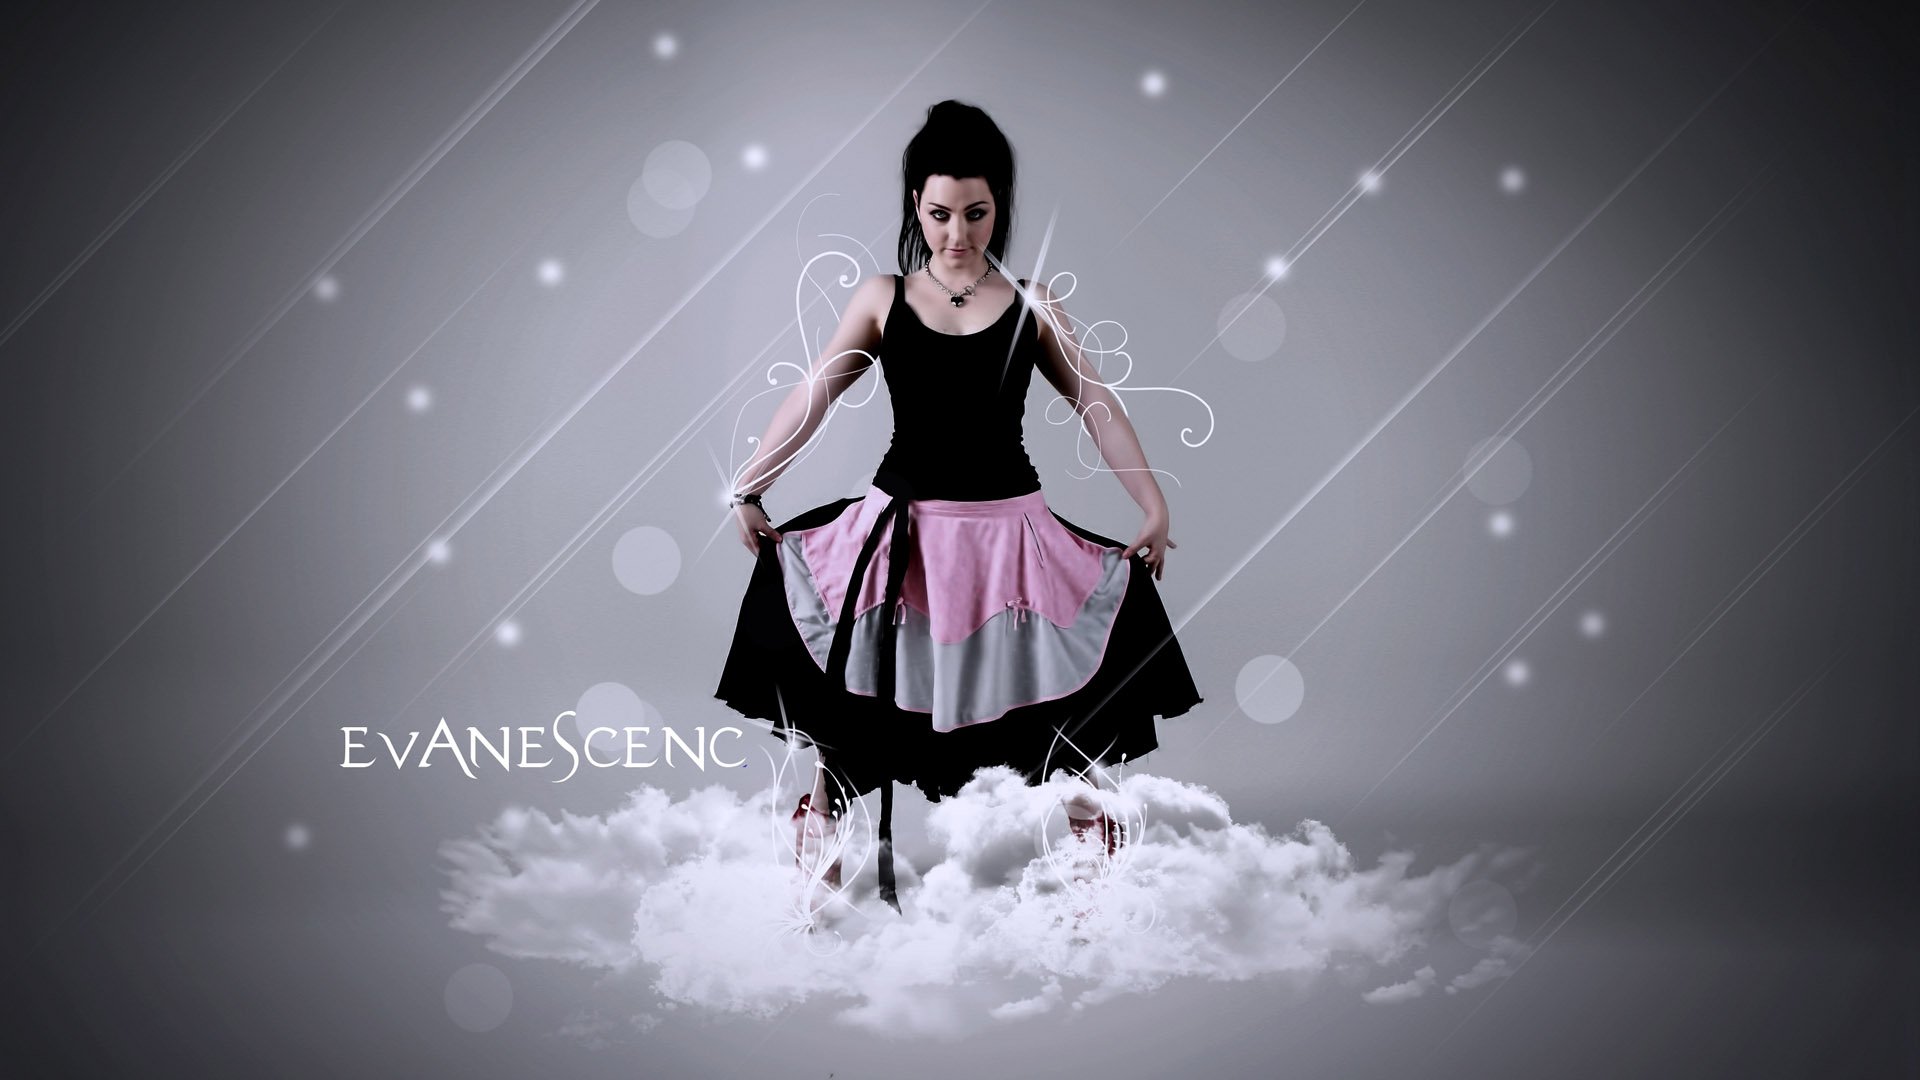 Wallpaper Evanescence Amy Lee Full HD Fondos De Pantalla